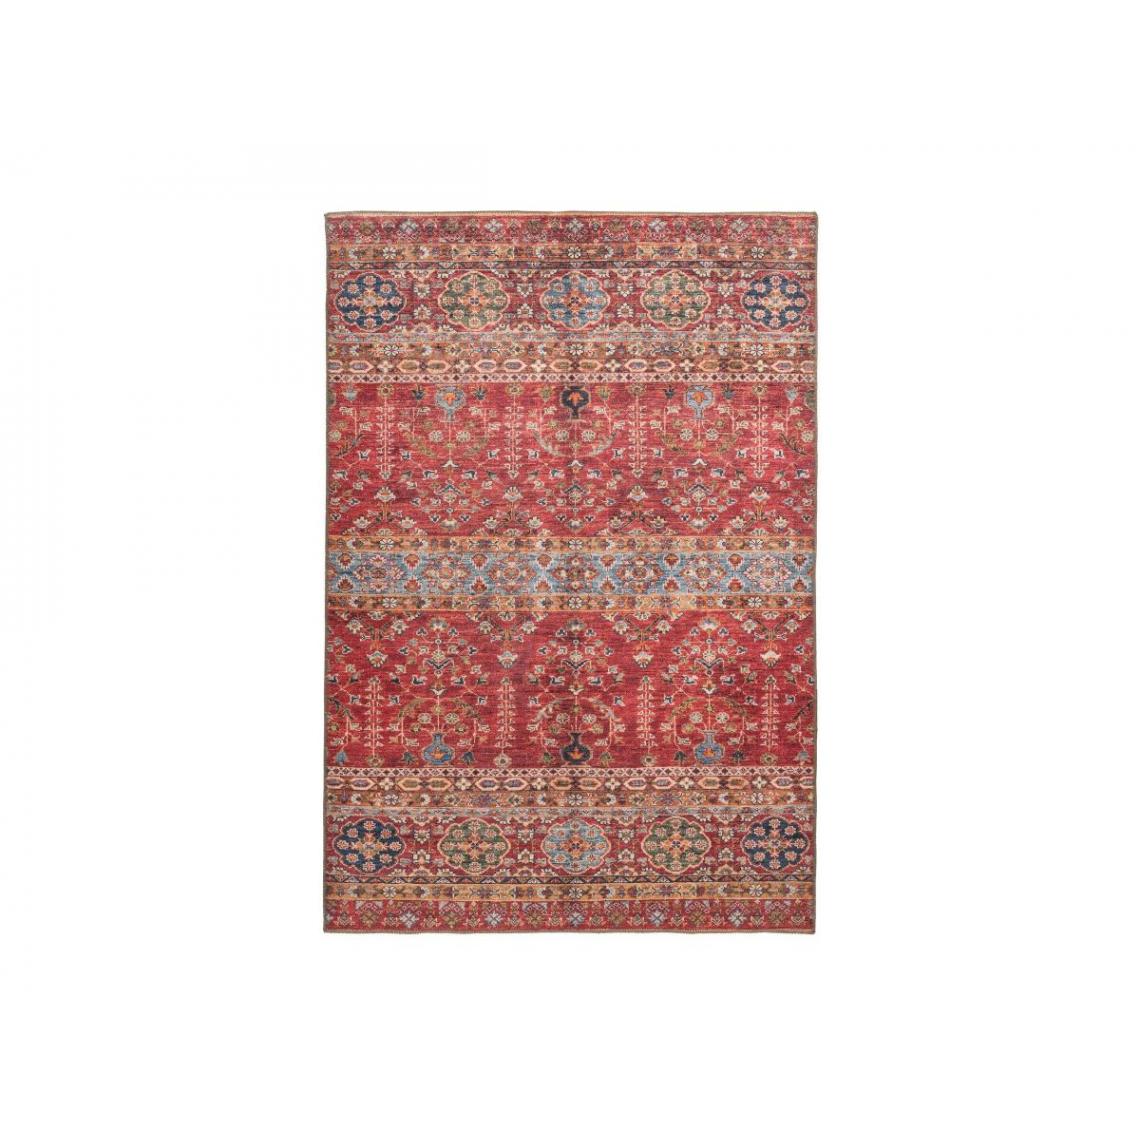 Bobochic - BOBOCHIC Tapis poil court rectangulaire ORATA motif vintage multicolor Multicolore 190x290 - Tapis